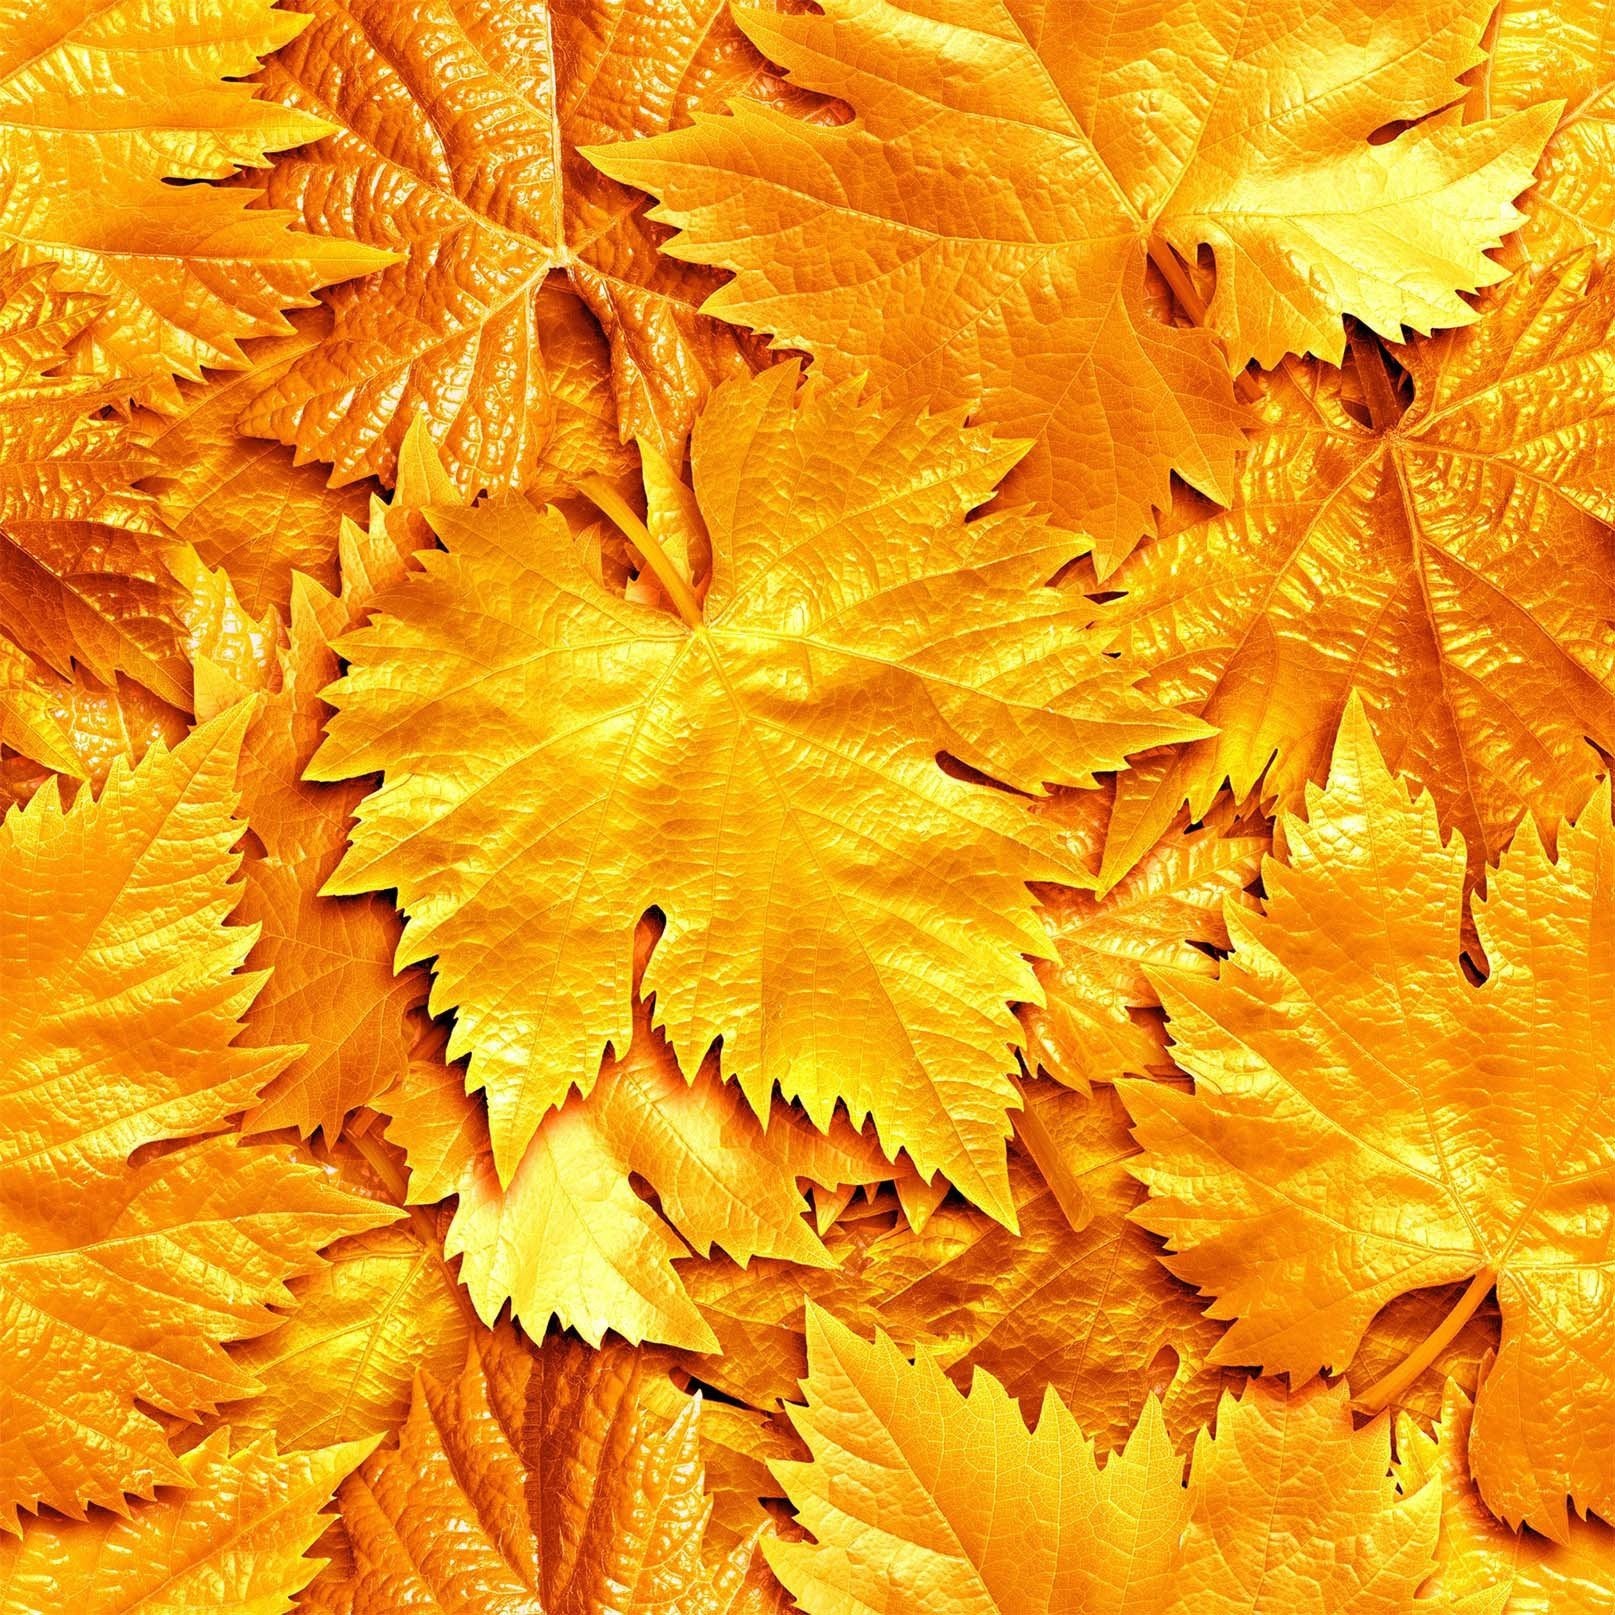 3D Golden Leaves 12 Kitchen Mat Floor Mural Wallpaper AJ Wallpaper 